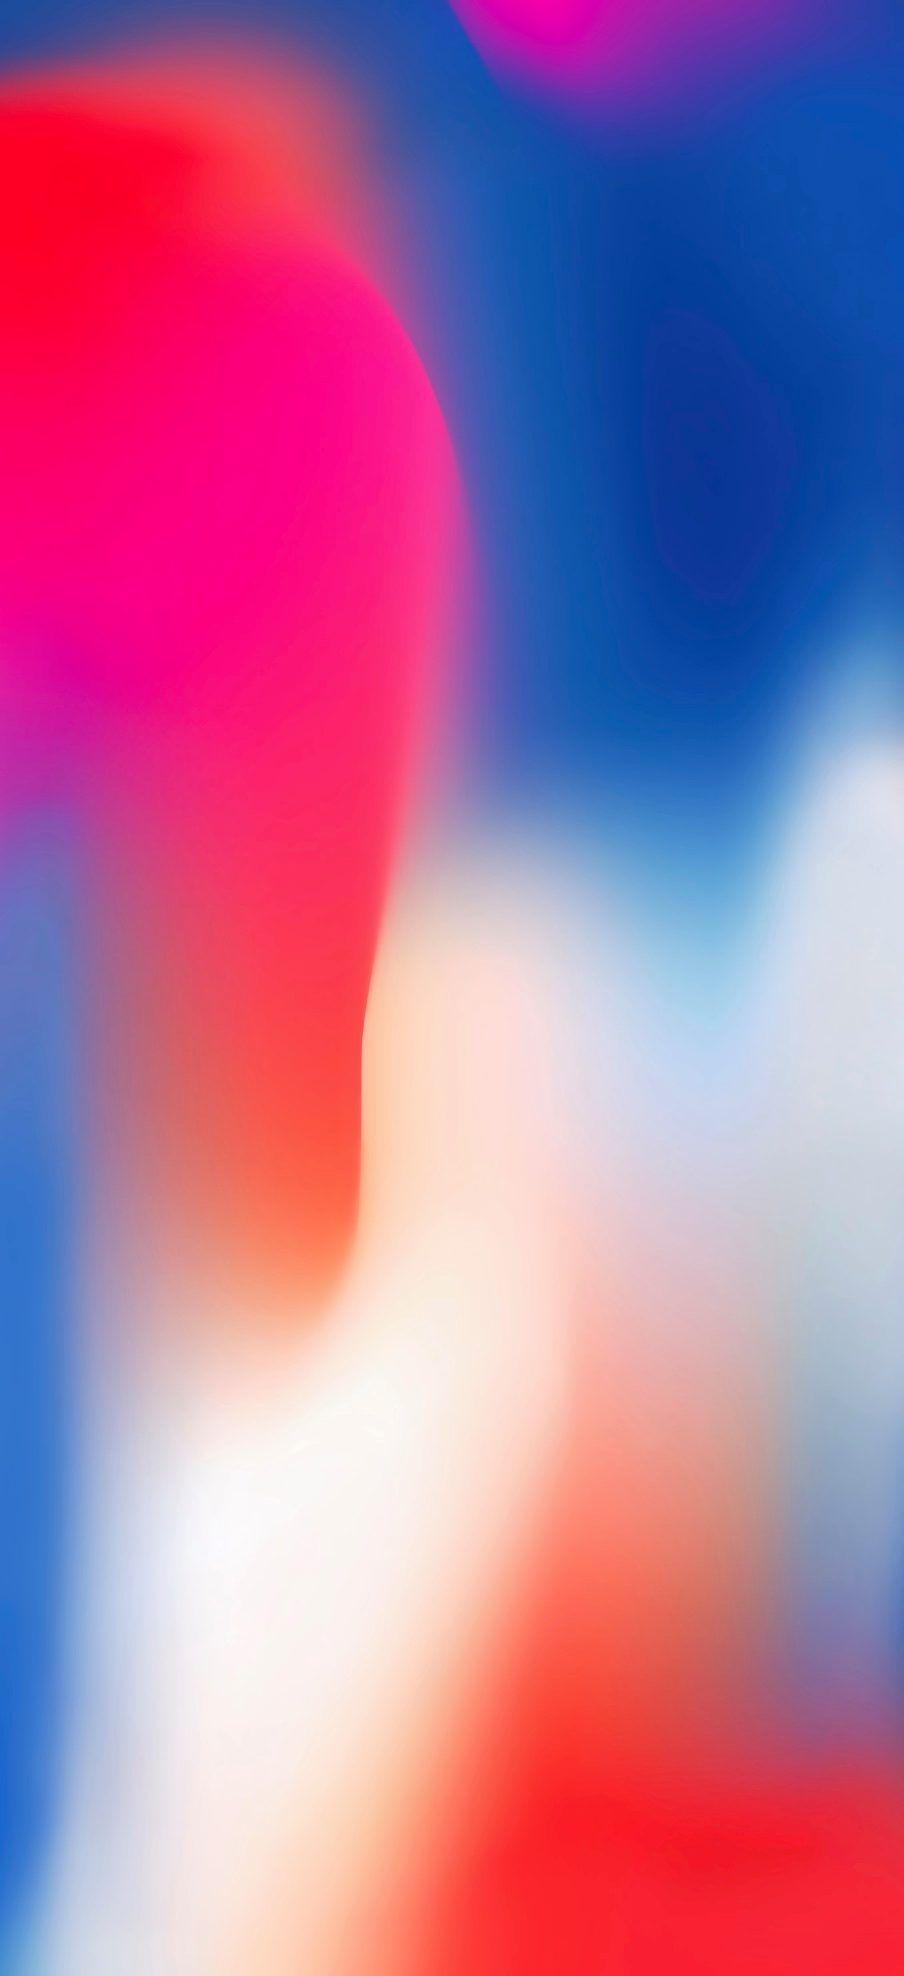 Liquid iPhone X Wallpapers - Top Free